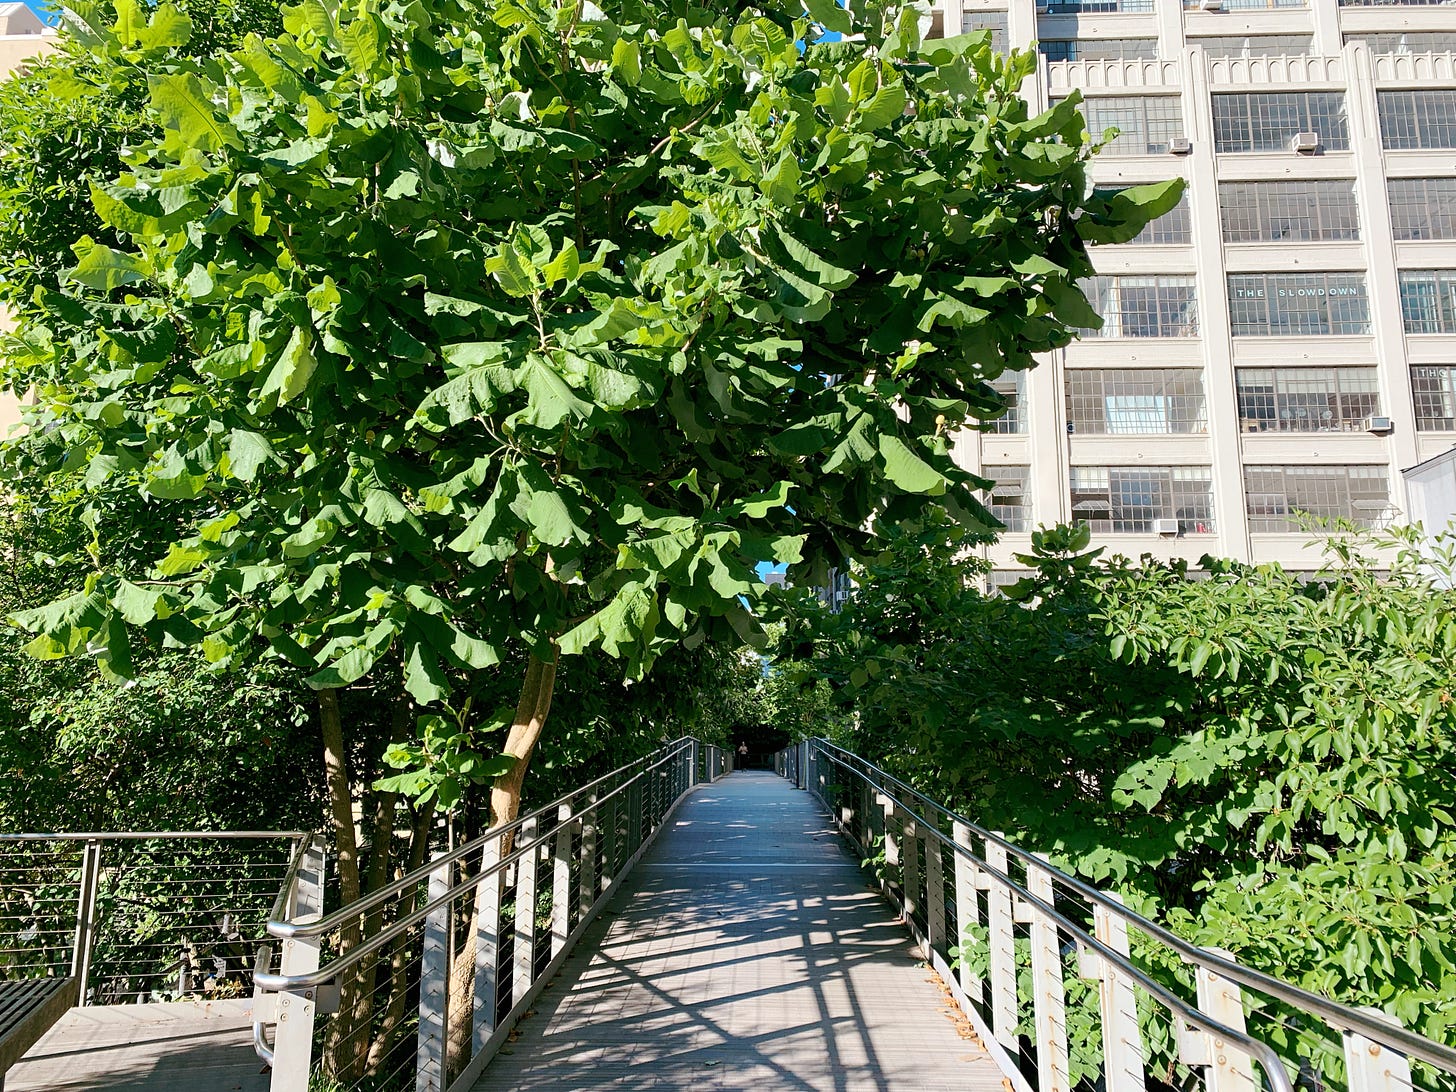 Narrow walkway on High Line with lots of greenery